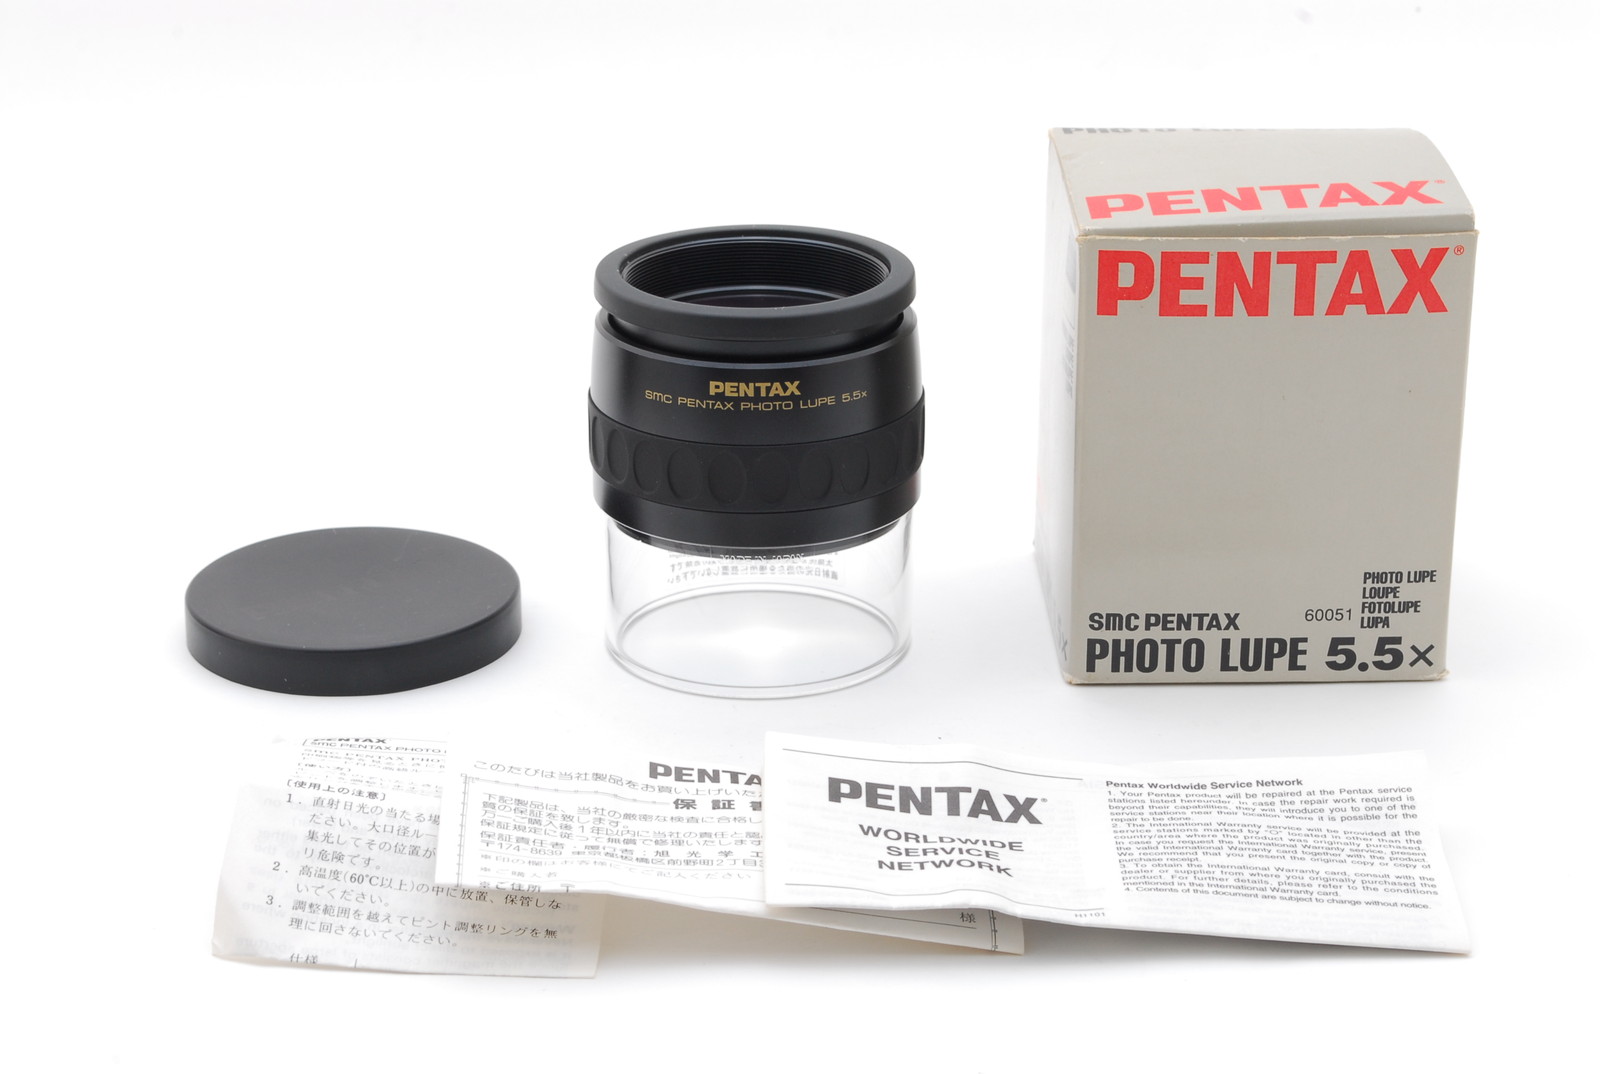 PROMOTION. NEAR MINT Pentax smc PENTAX PHOTO LUPE 5.5x, Box, Cap, Manual from Japan